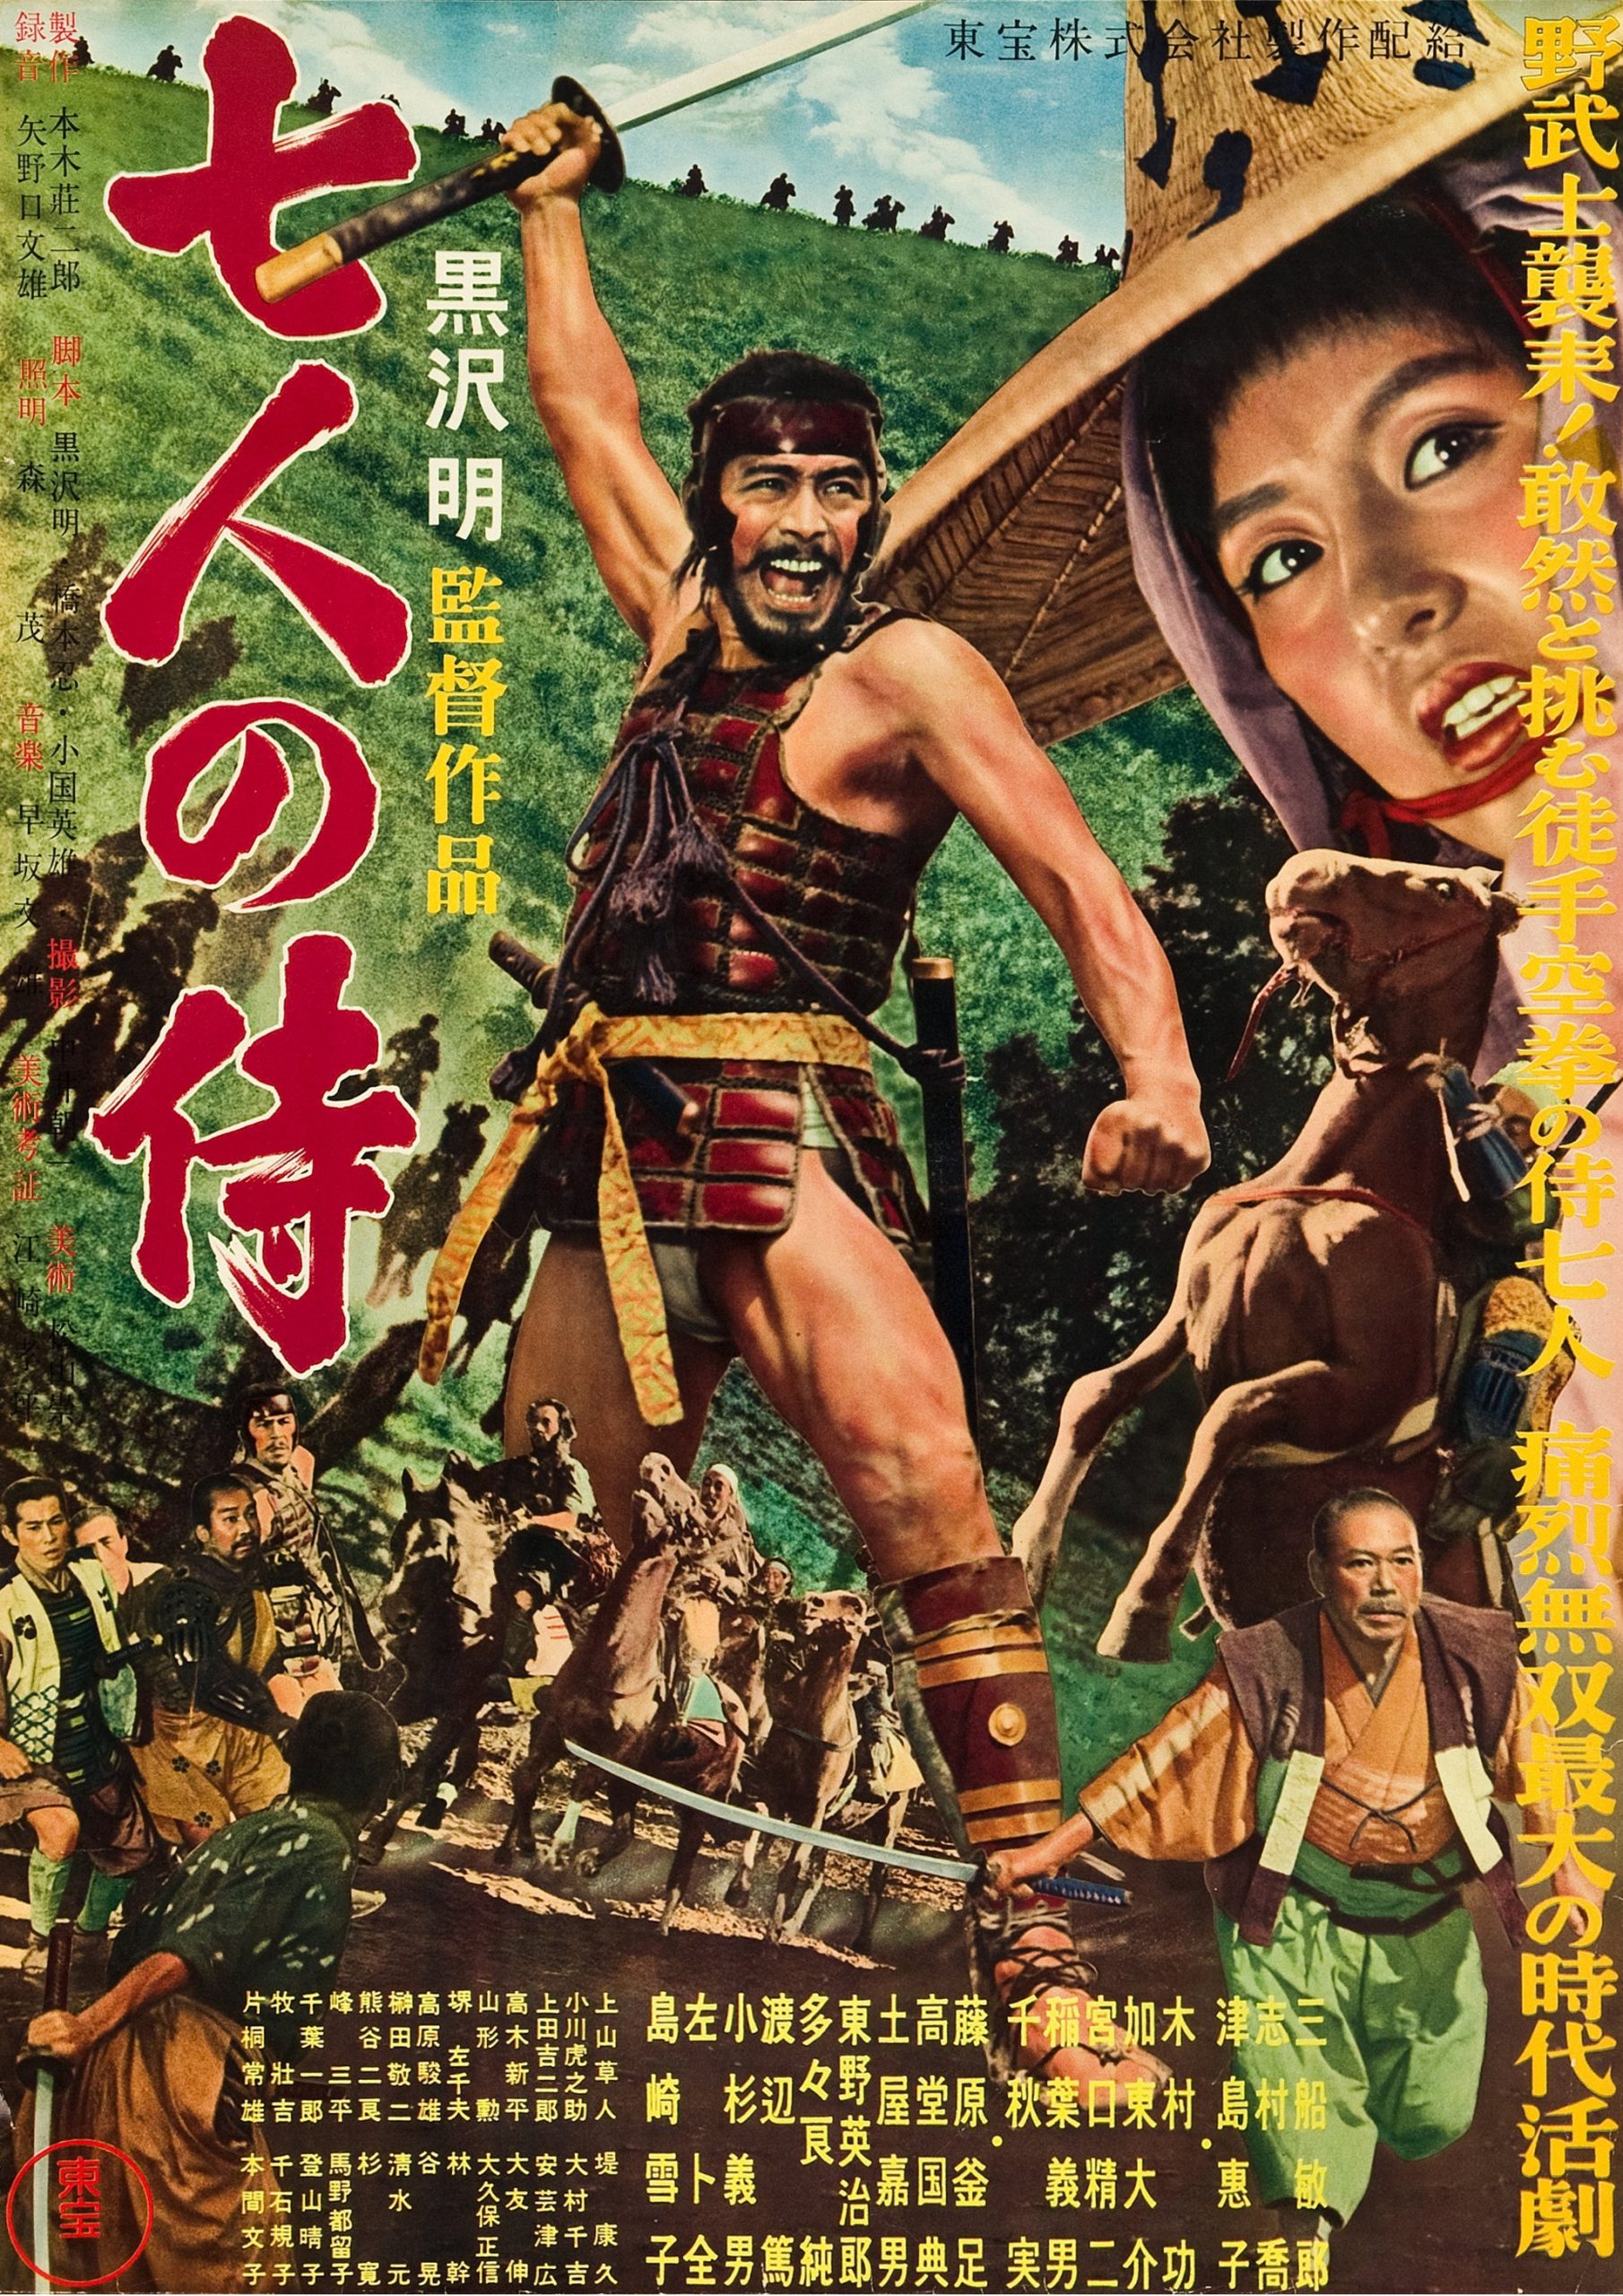 Seven samurai poster by Akira Kurosawa